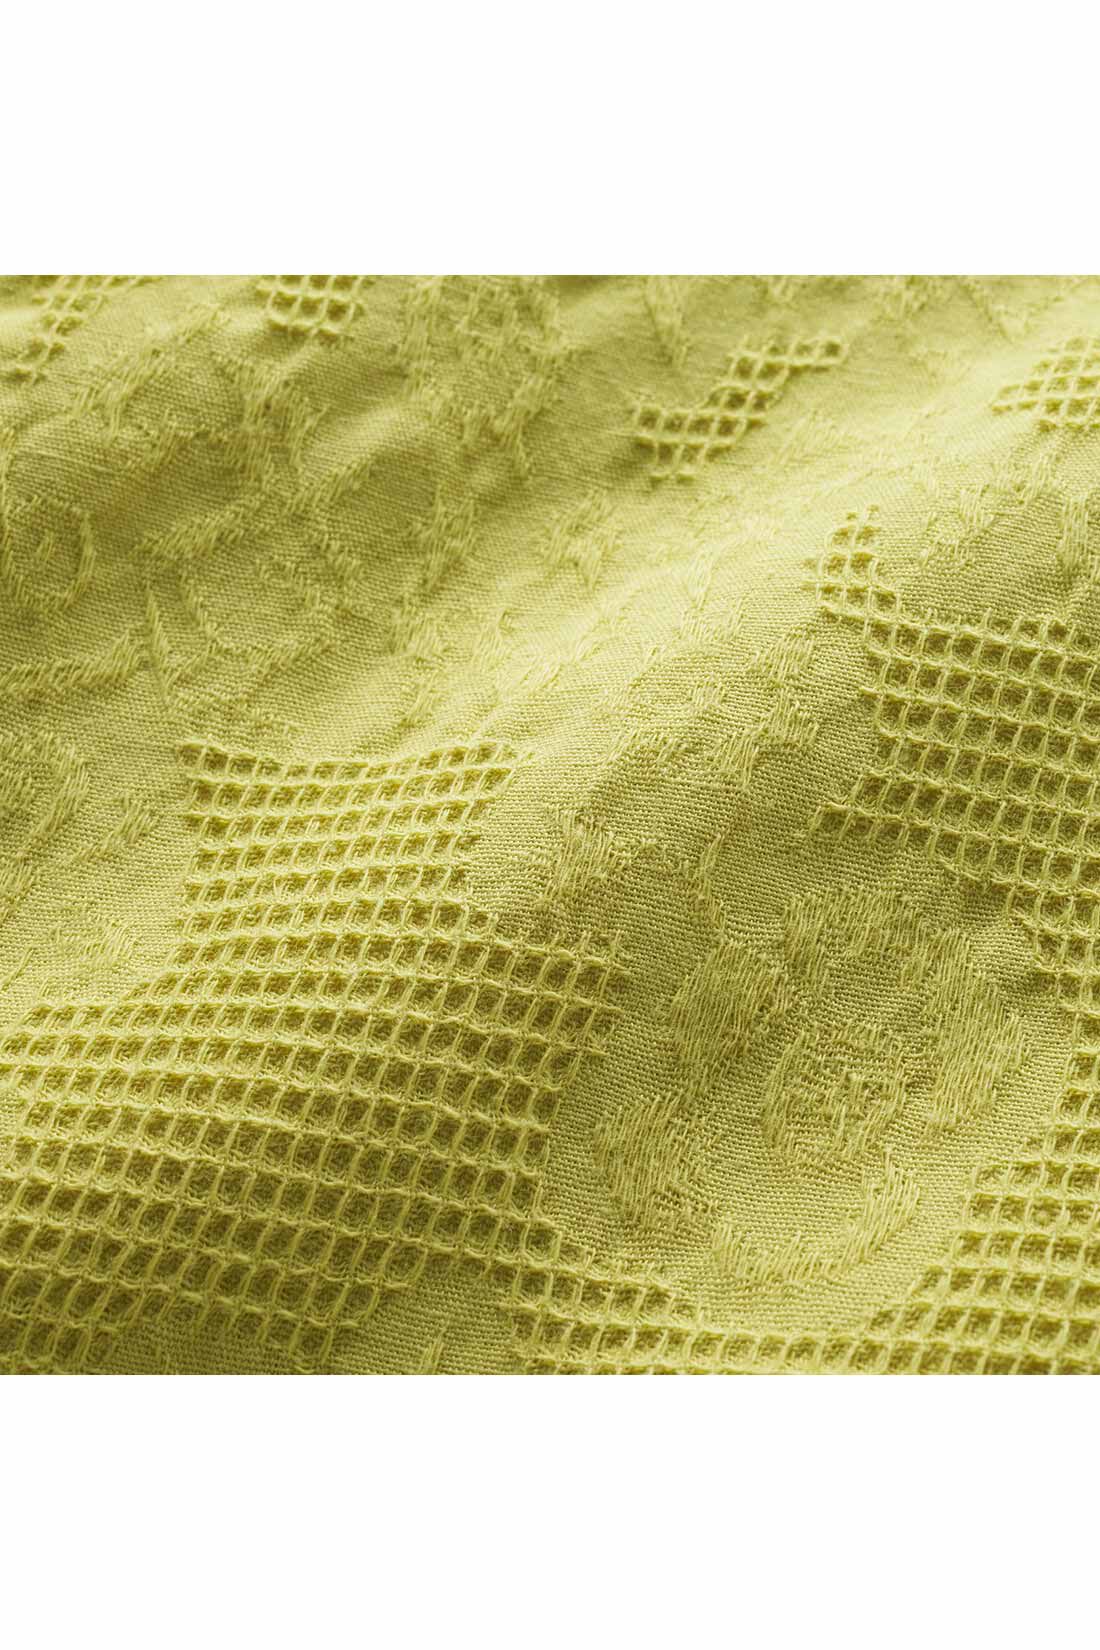 Real Stock|IEDIT[イディット]　フラワー柄のコットンドビープルオーバー〈ライムグリーン〉|格子柄の中に花が浮き立つ、立体的な織り柄のコットンドビー素材がさらりと快適。